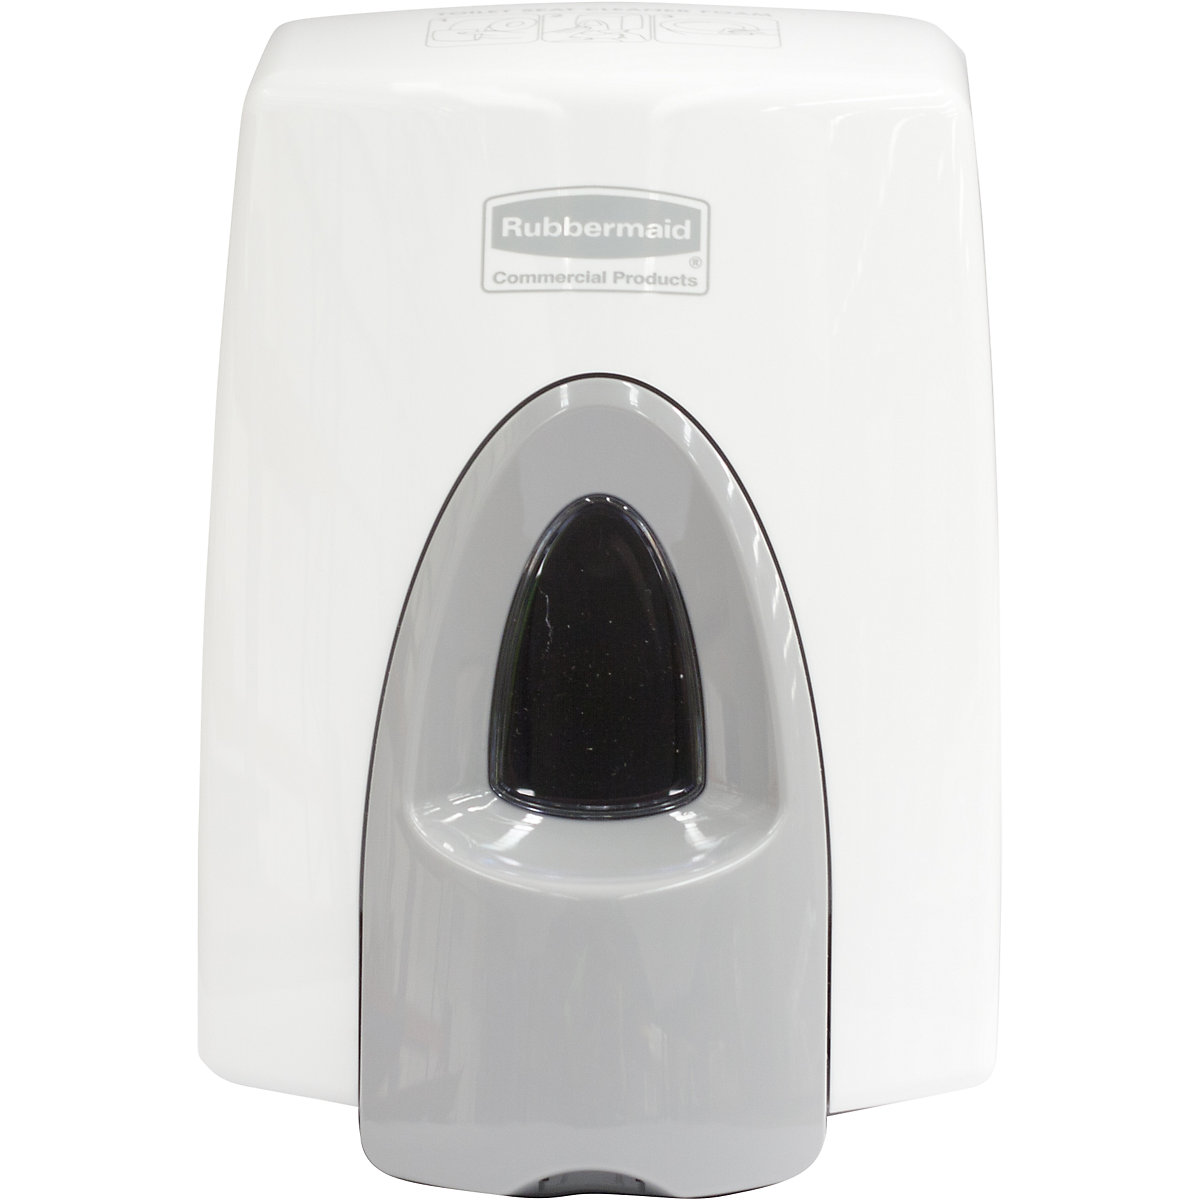 Foam dispenser for toilet seat cleaner - Rubbermaid